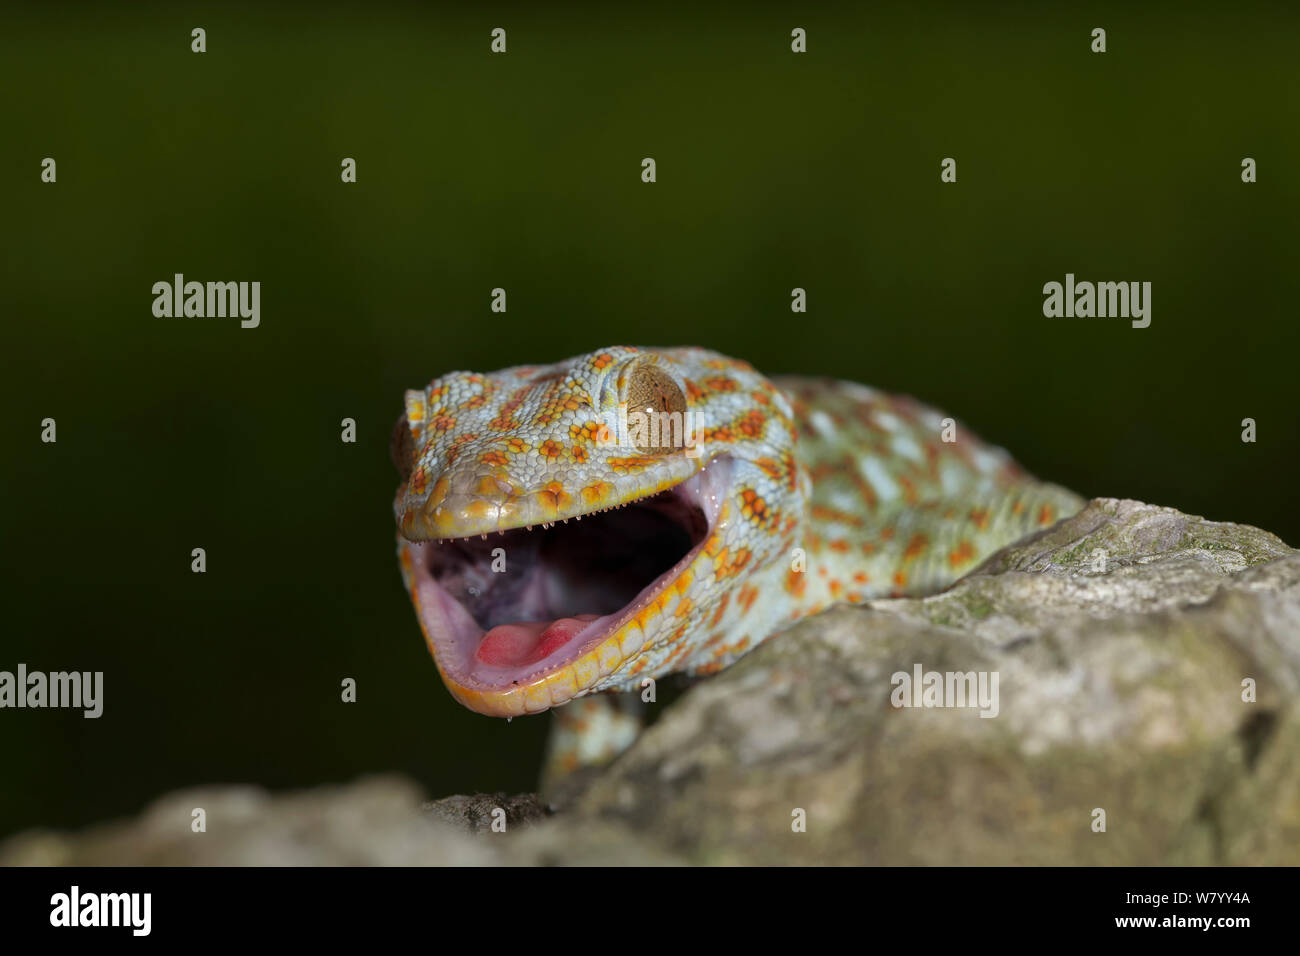 Tokay gecko (Gekko gecko) with mouth open, Guangxi province, China, July. Stock Photo